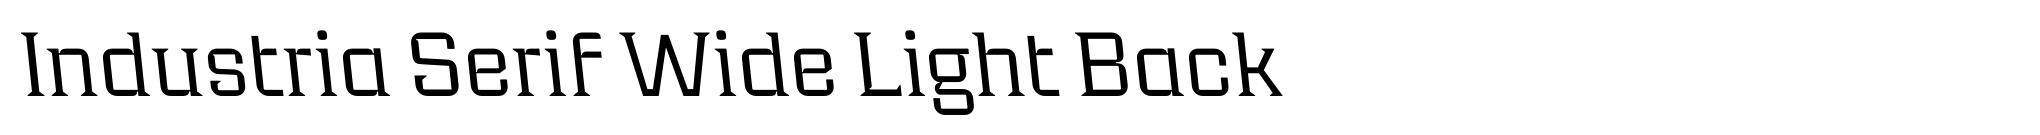 Industria Serif Wide Light Back image